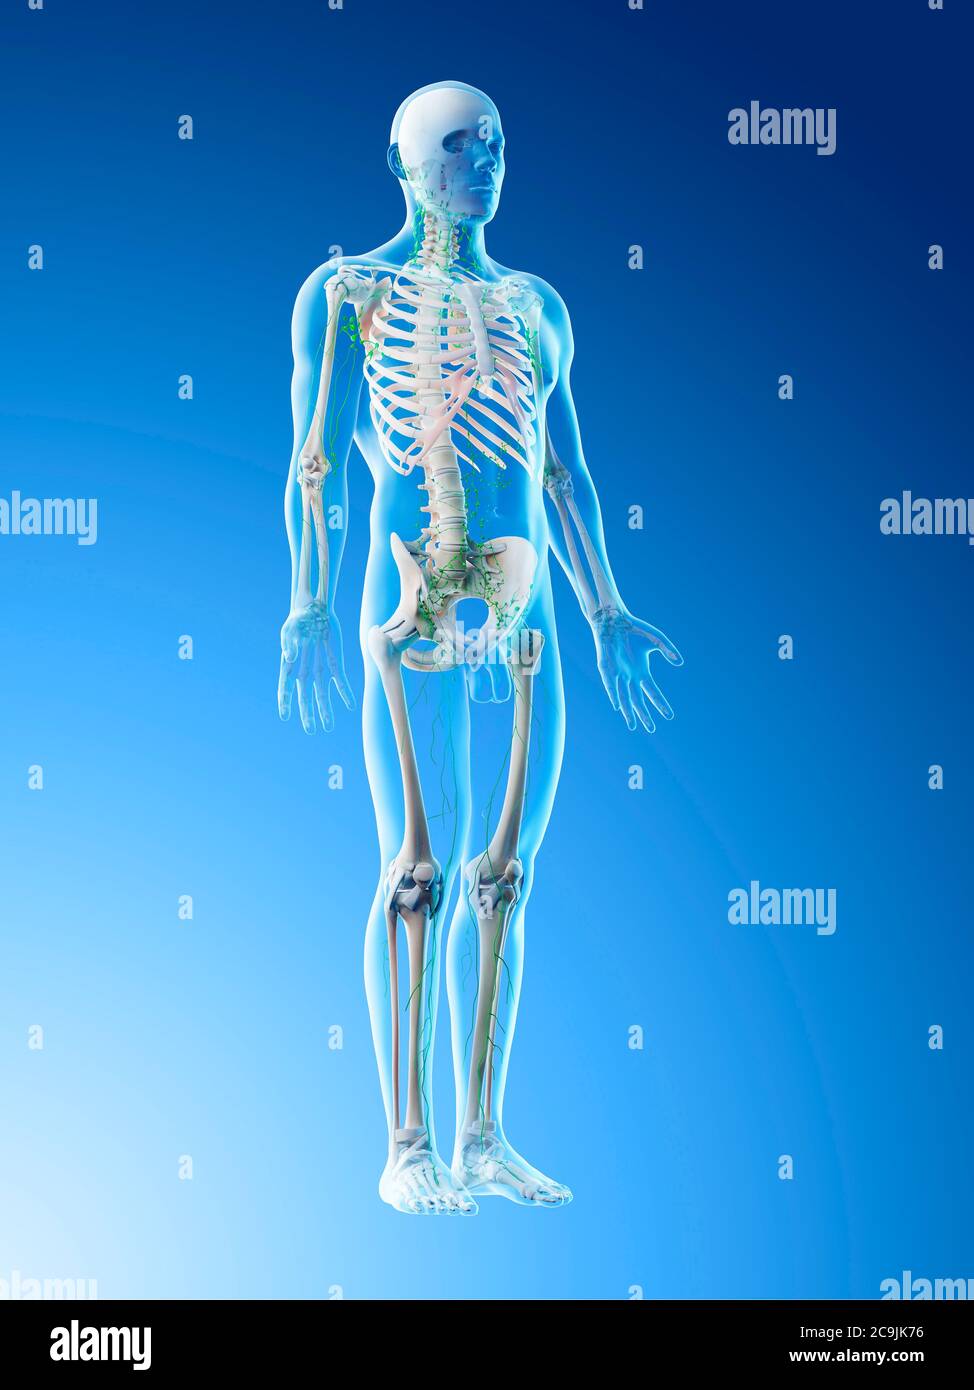 Lymphatic system, computer illustration Stock Photo - Alamy